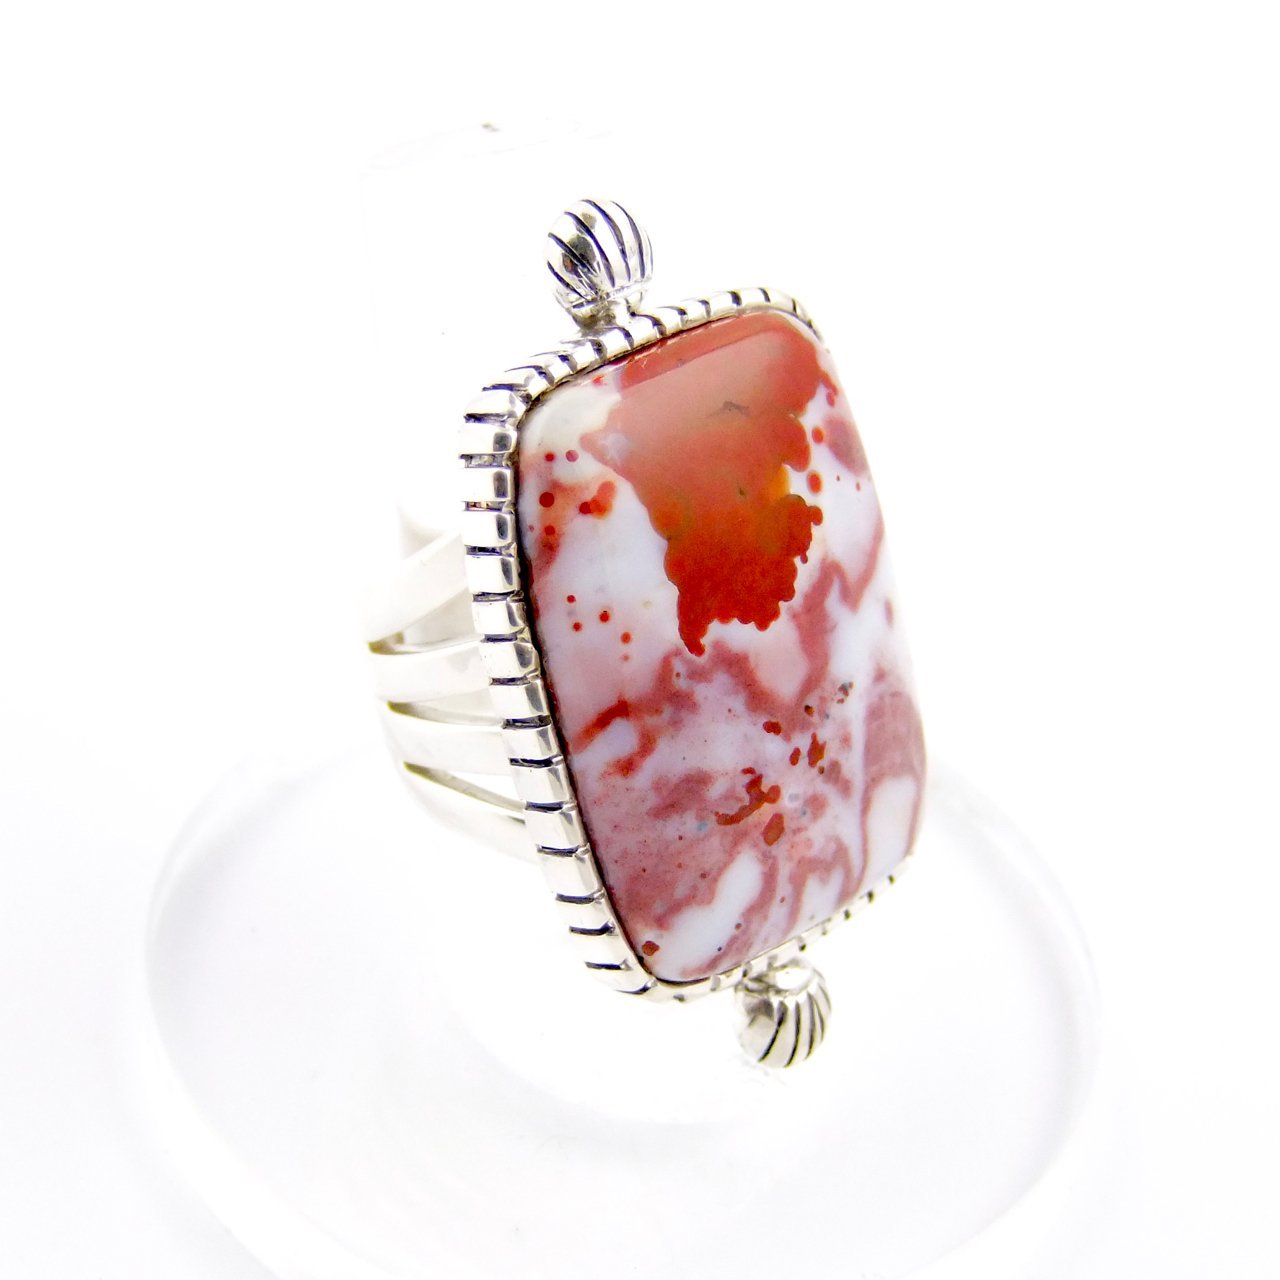 Load image into Gallery viewer, Cherry Ocean Jasper Ring - Kingdom Jewelry
